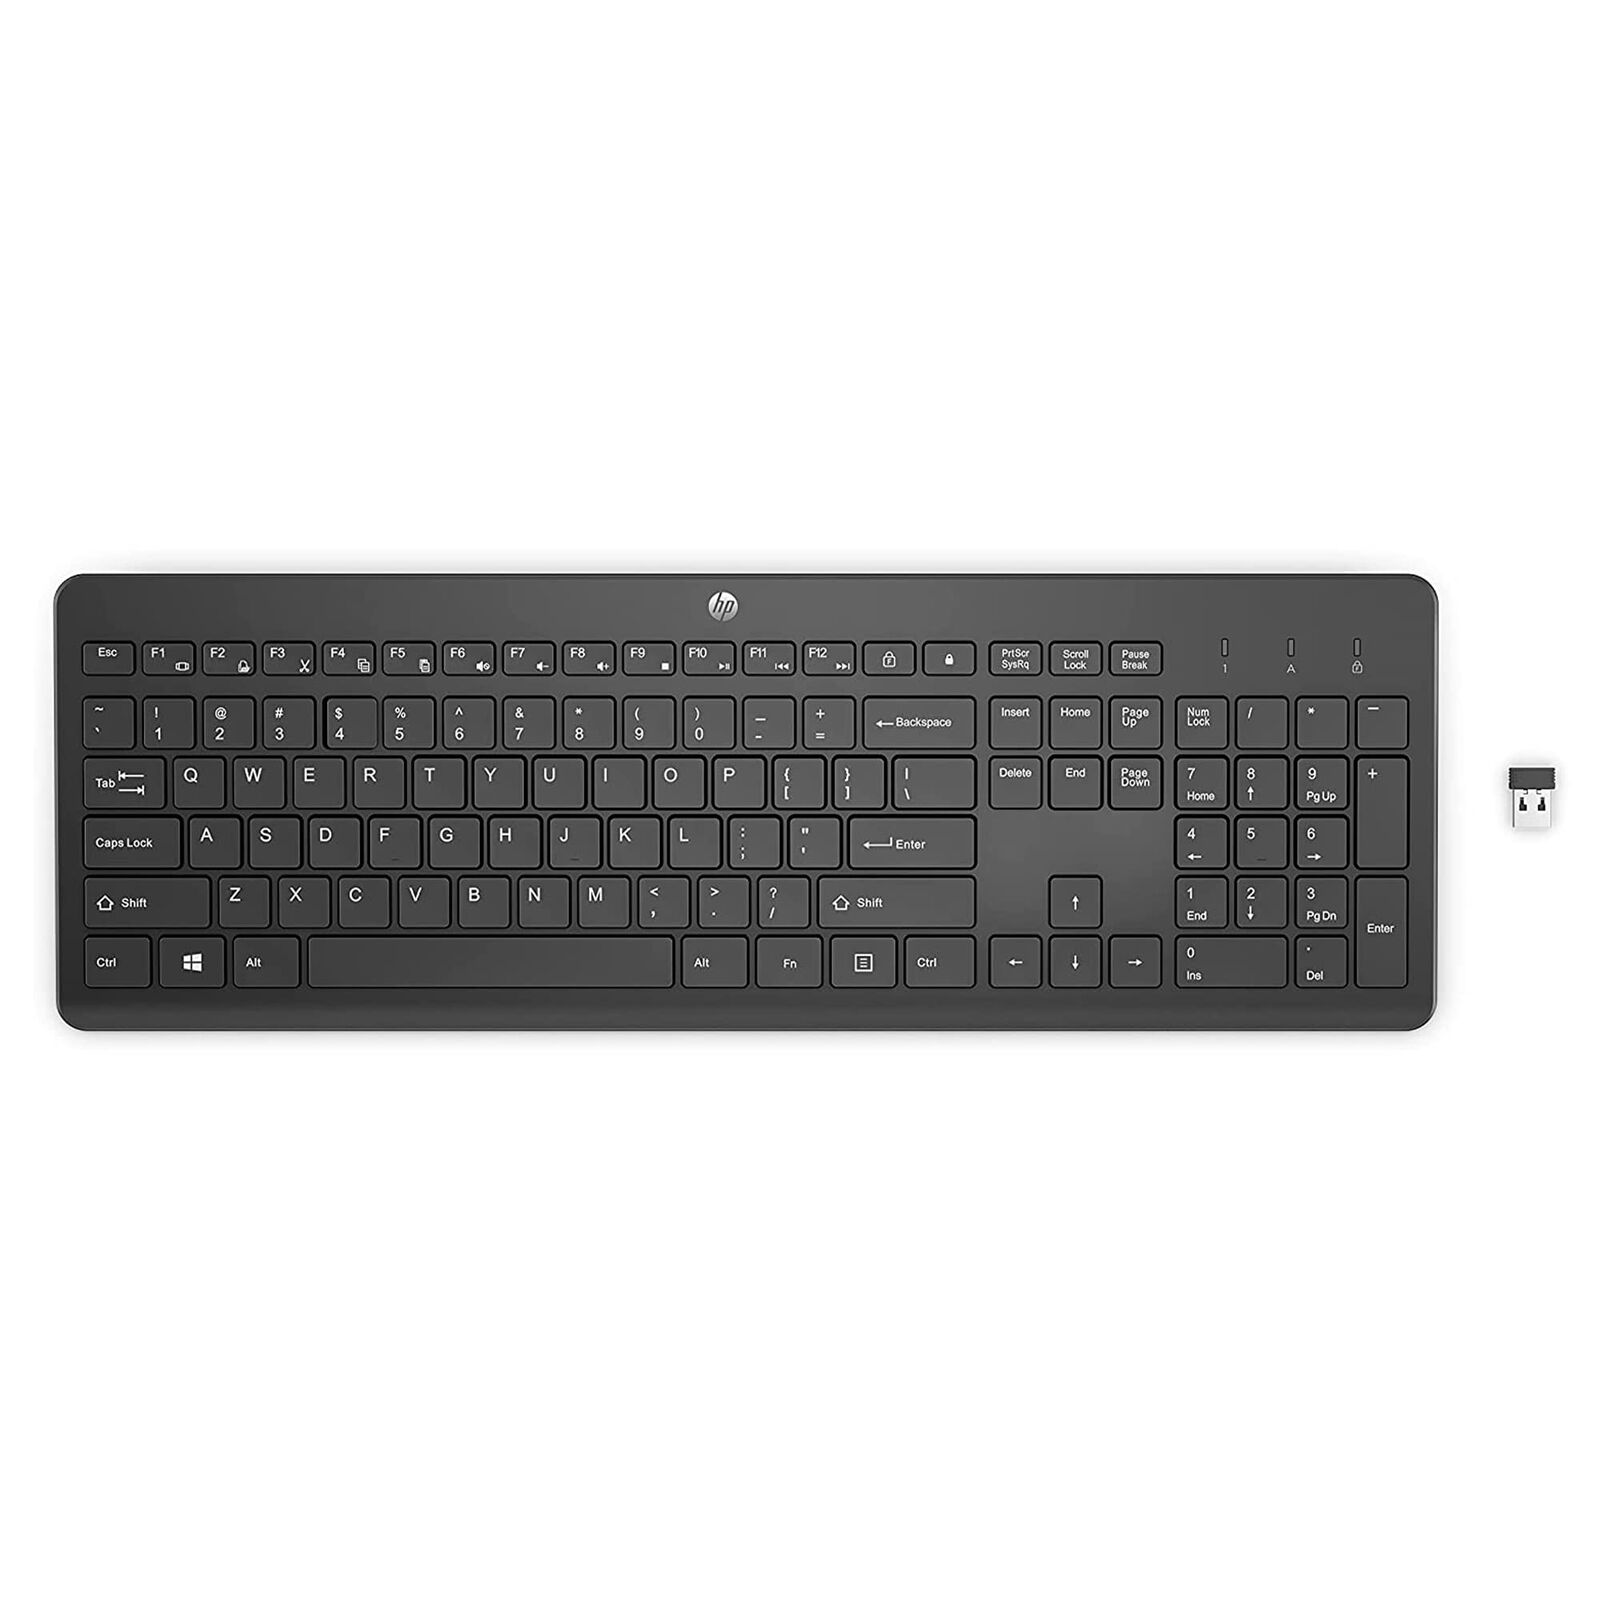 HP 230 Wireless Keyboard - Wireless Connection - Low-Profile, Quiet Design -